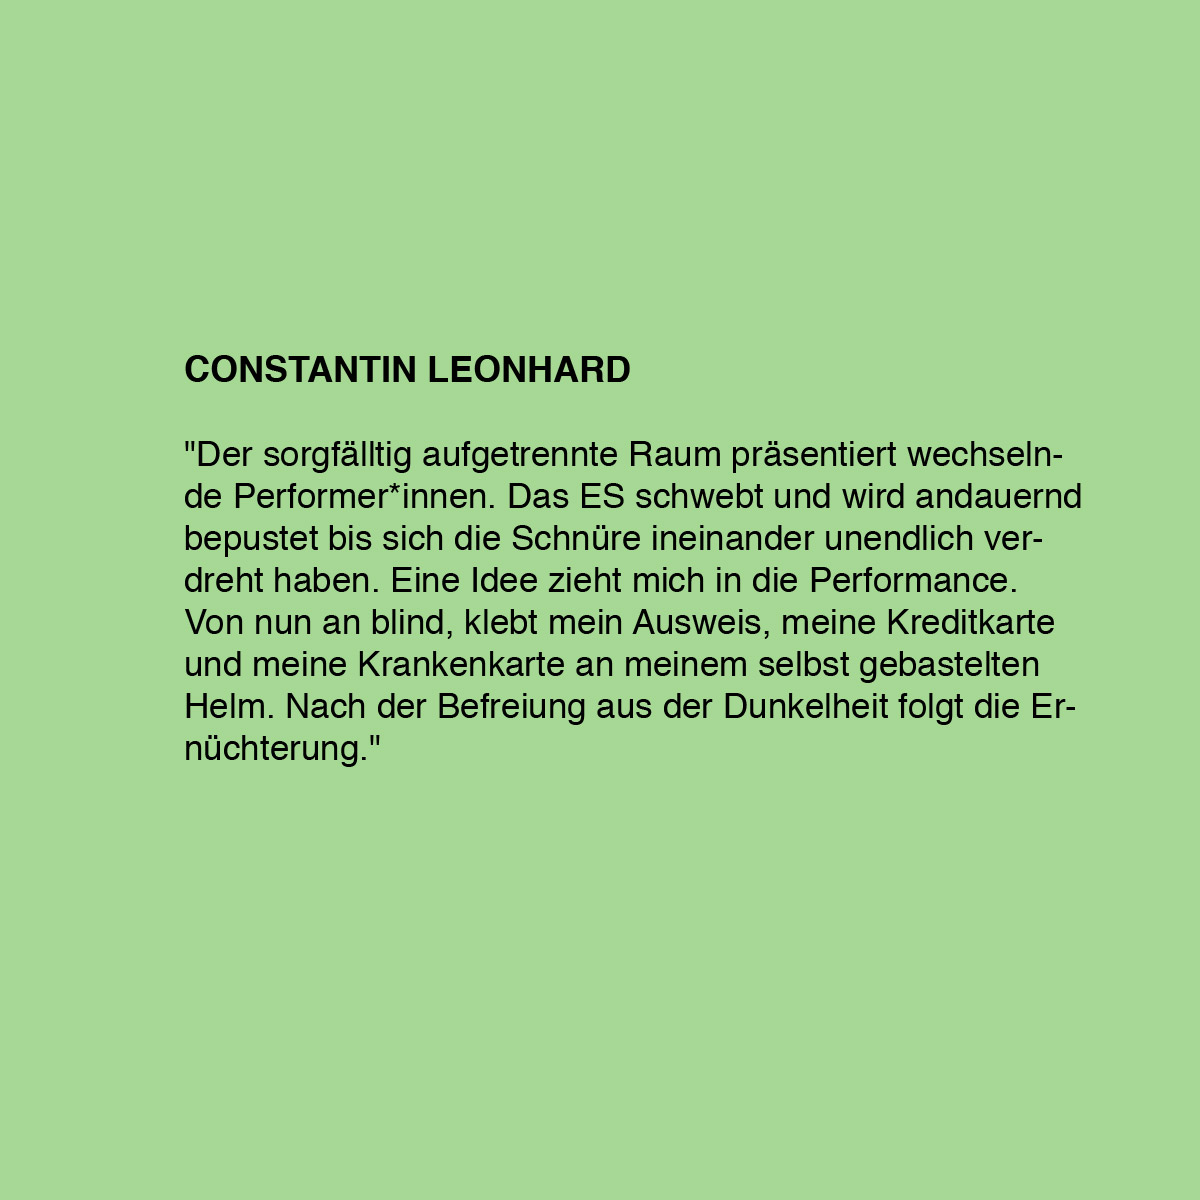 ConstantinLeonhard